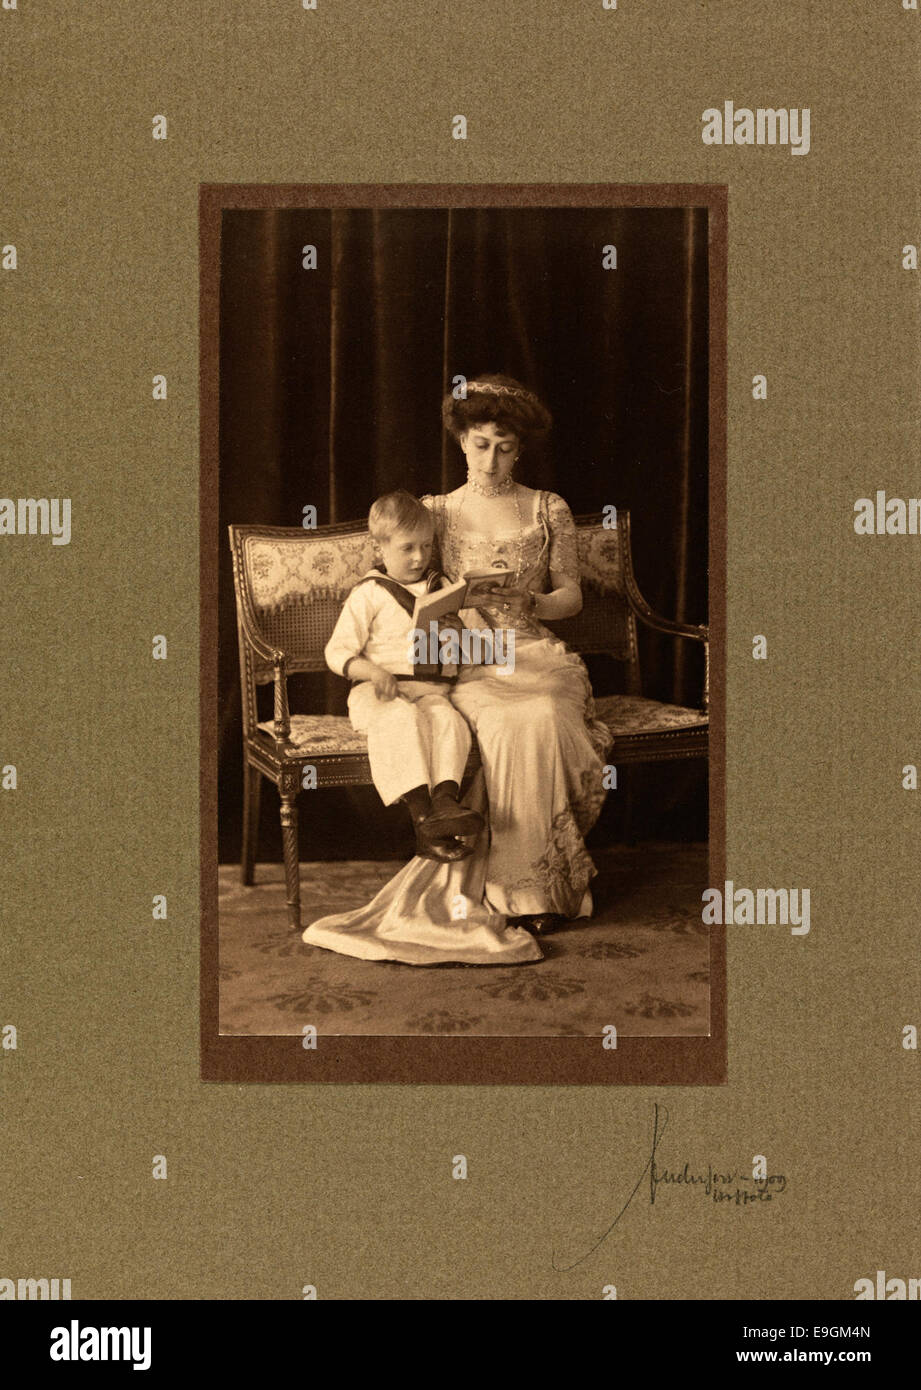 Dronning Maud leser per Kronprins Olav, 1909 Foto Stock